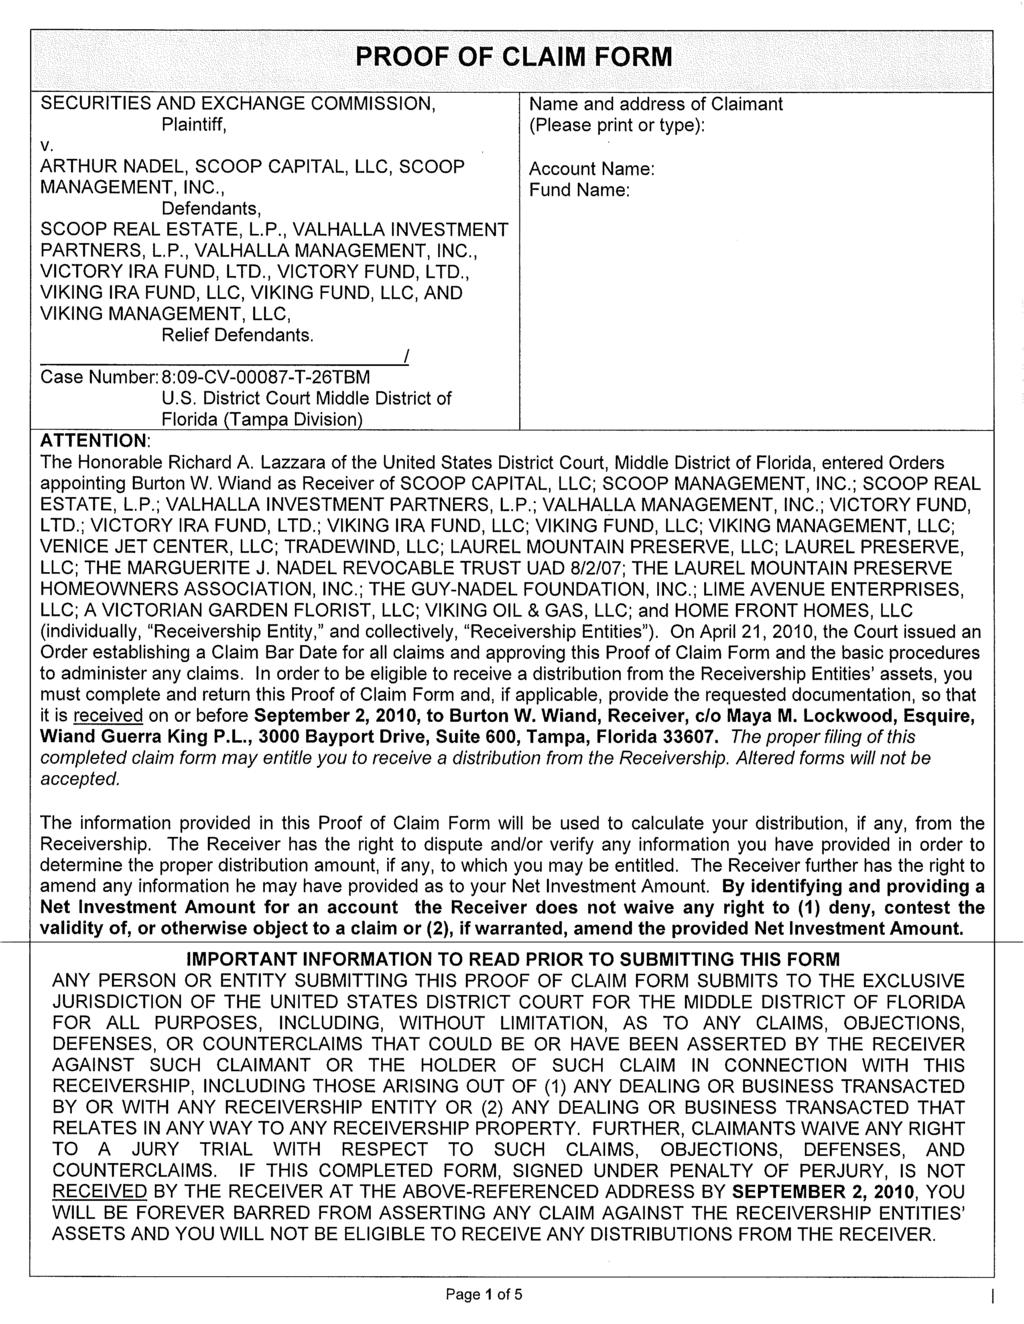 Case 8:09-cv-00087-RAL-TBM Document